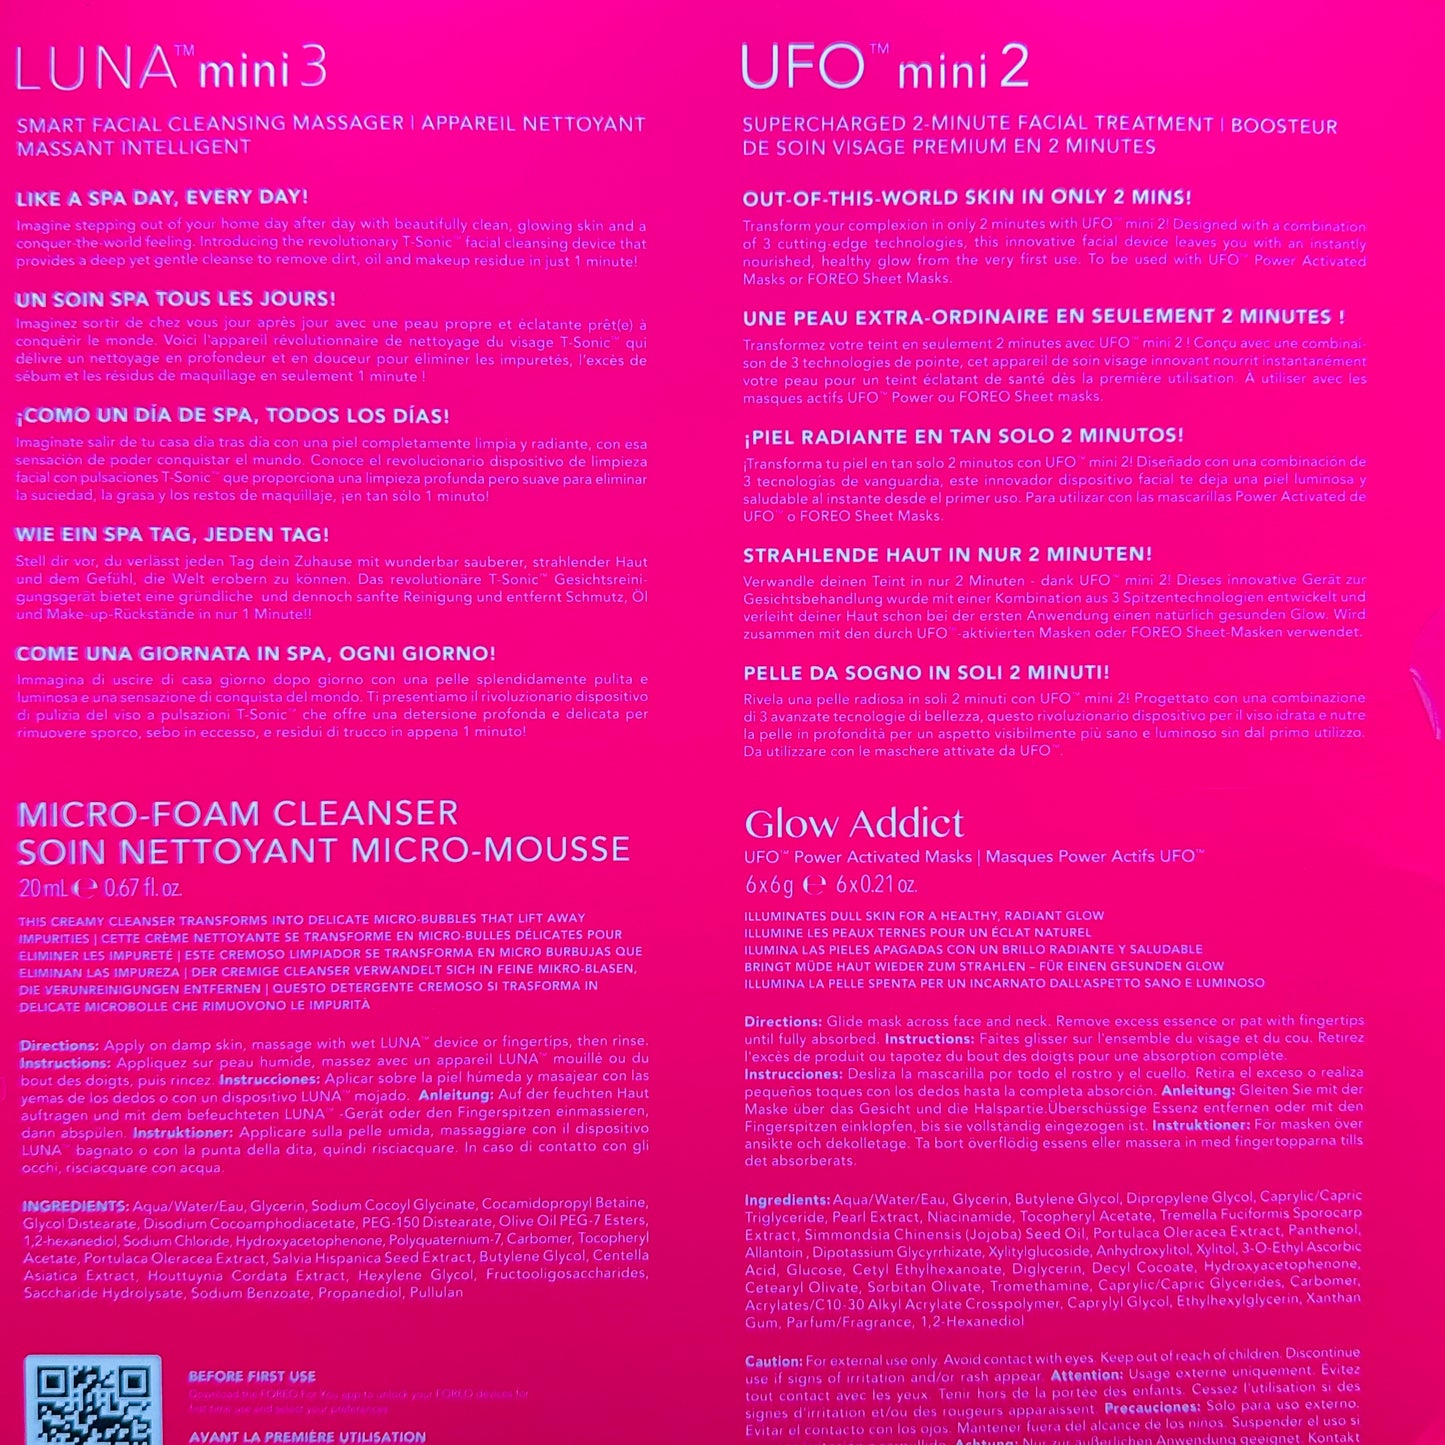 Luna mini 3 + UFO™ mini 2 4-Piece Gift Set